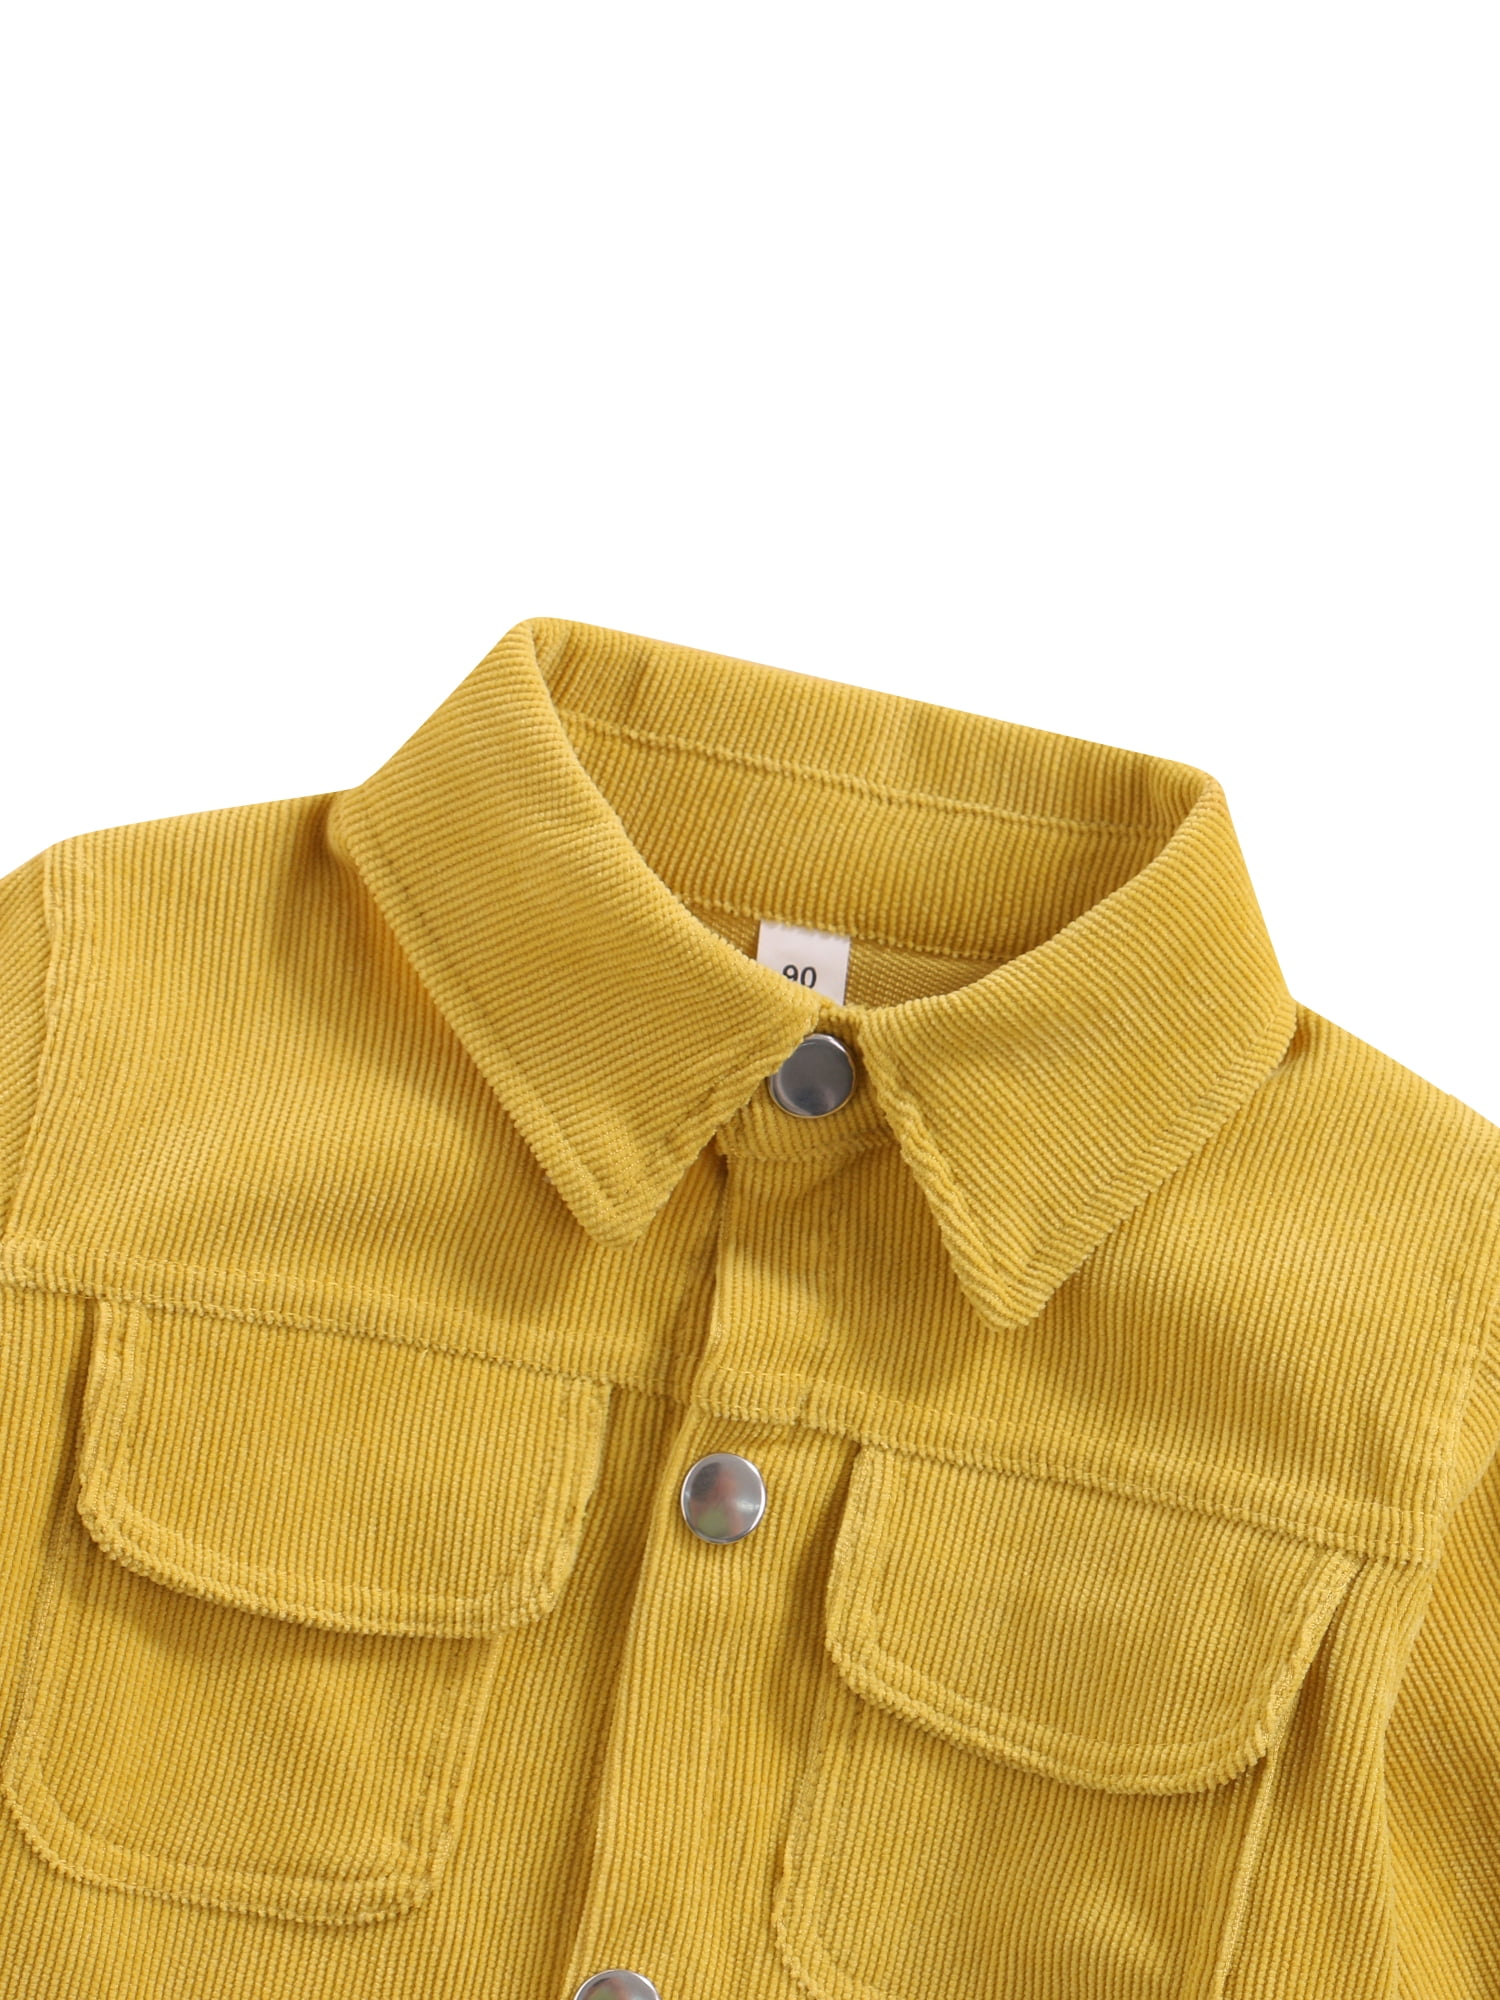 LisenraIn 2-7Y Kids Girls Shirts Jacket Outwear Single Breasted Long Sleeve  Hooded Back Letters Print Pockets Jacket 